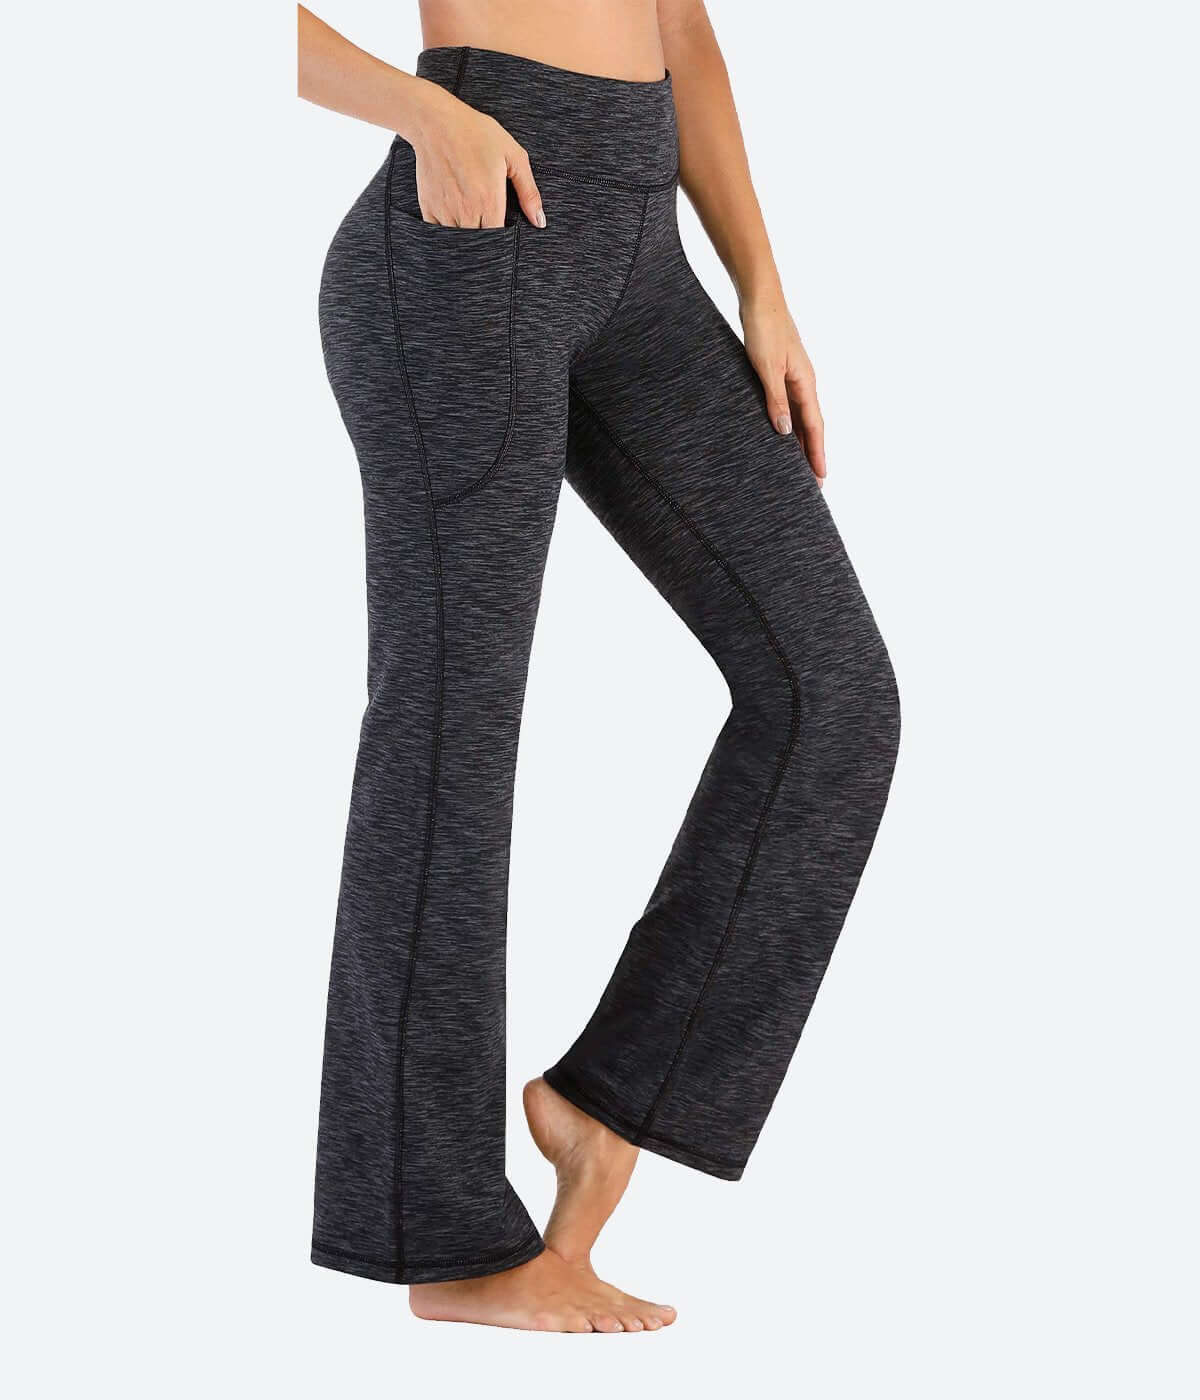 Heathyoga Bootcut Yoga Pants with Pockets - HY 90, Black